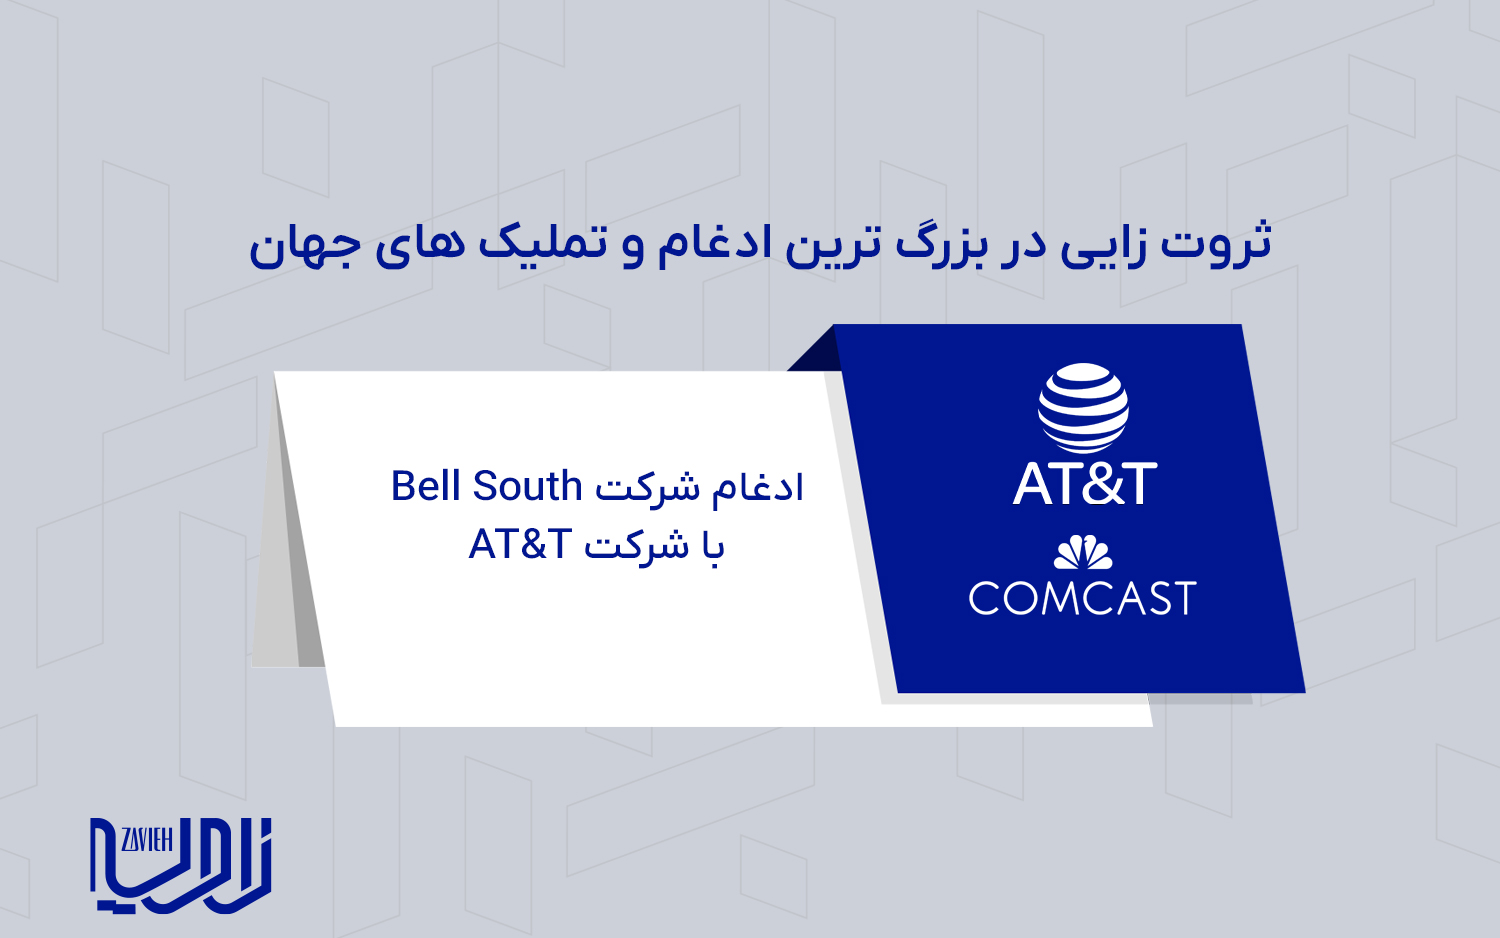 ادغام شرکت Bell South با شرکت AT&T